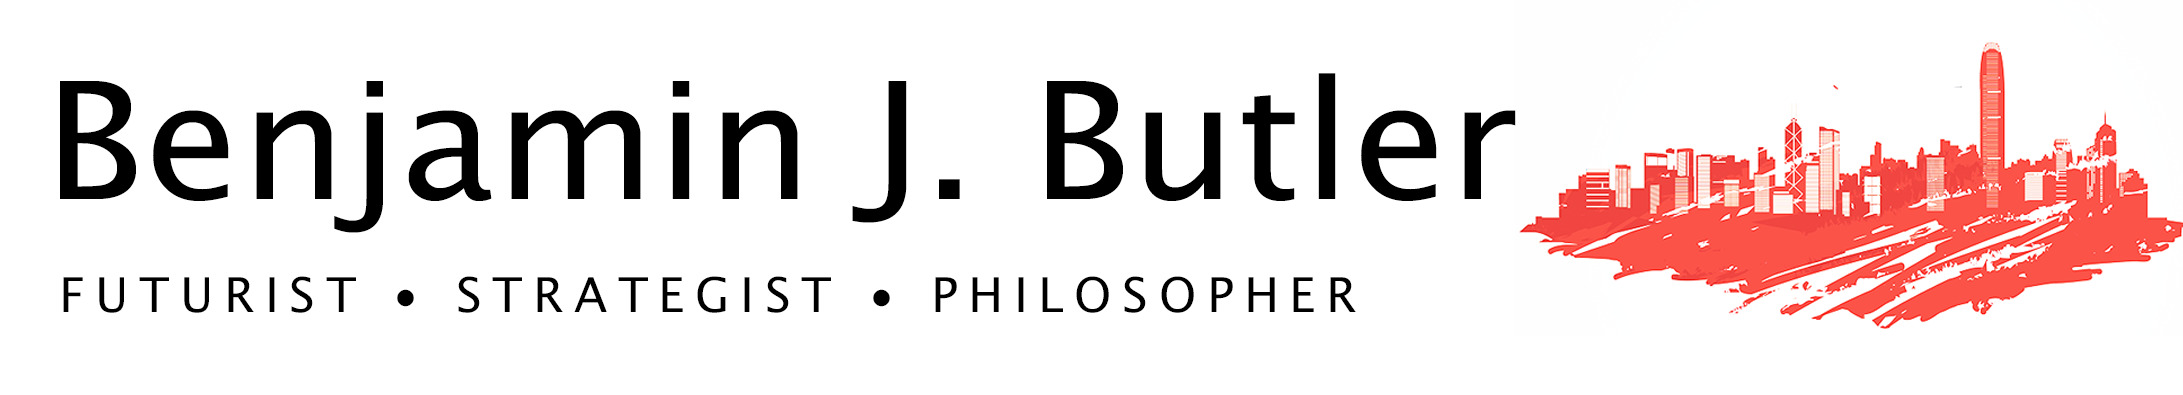 Benjamin J Butler - Futurist